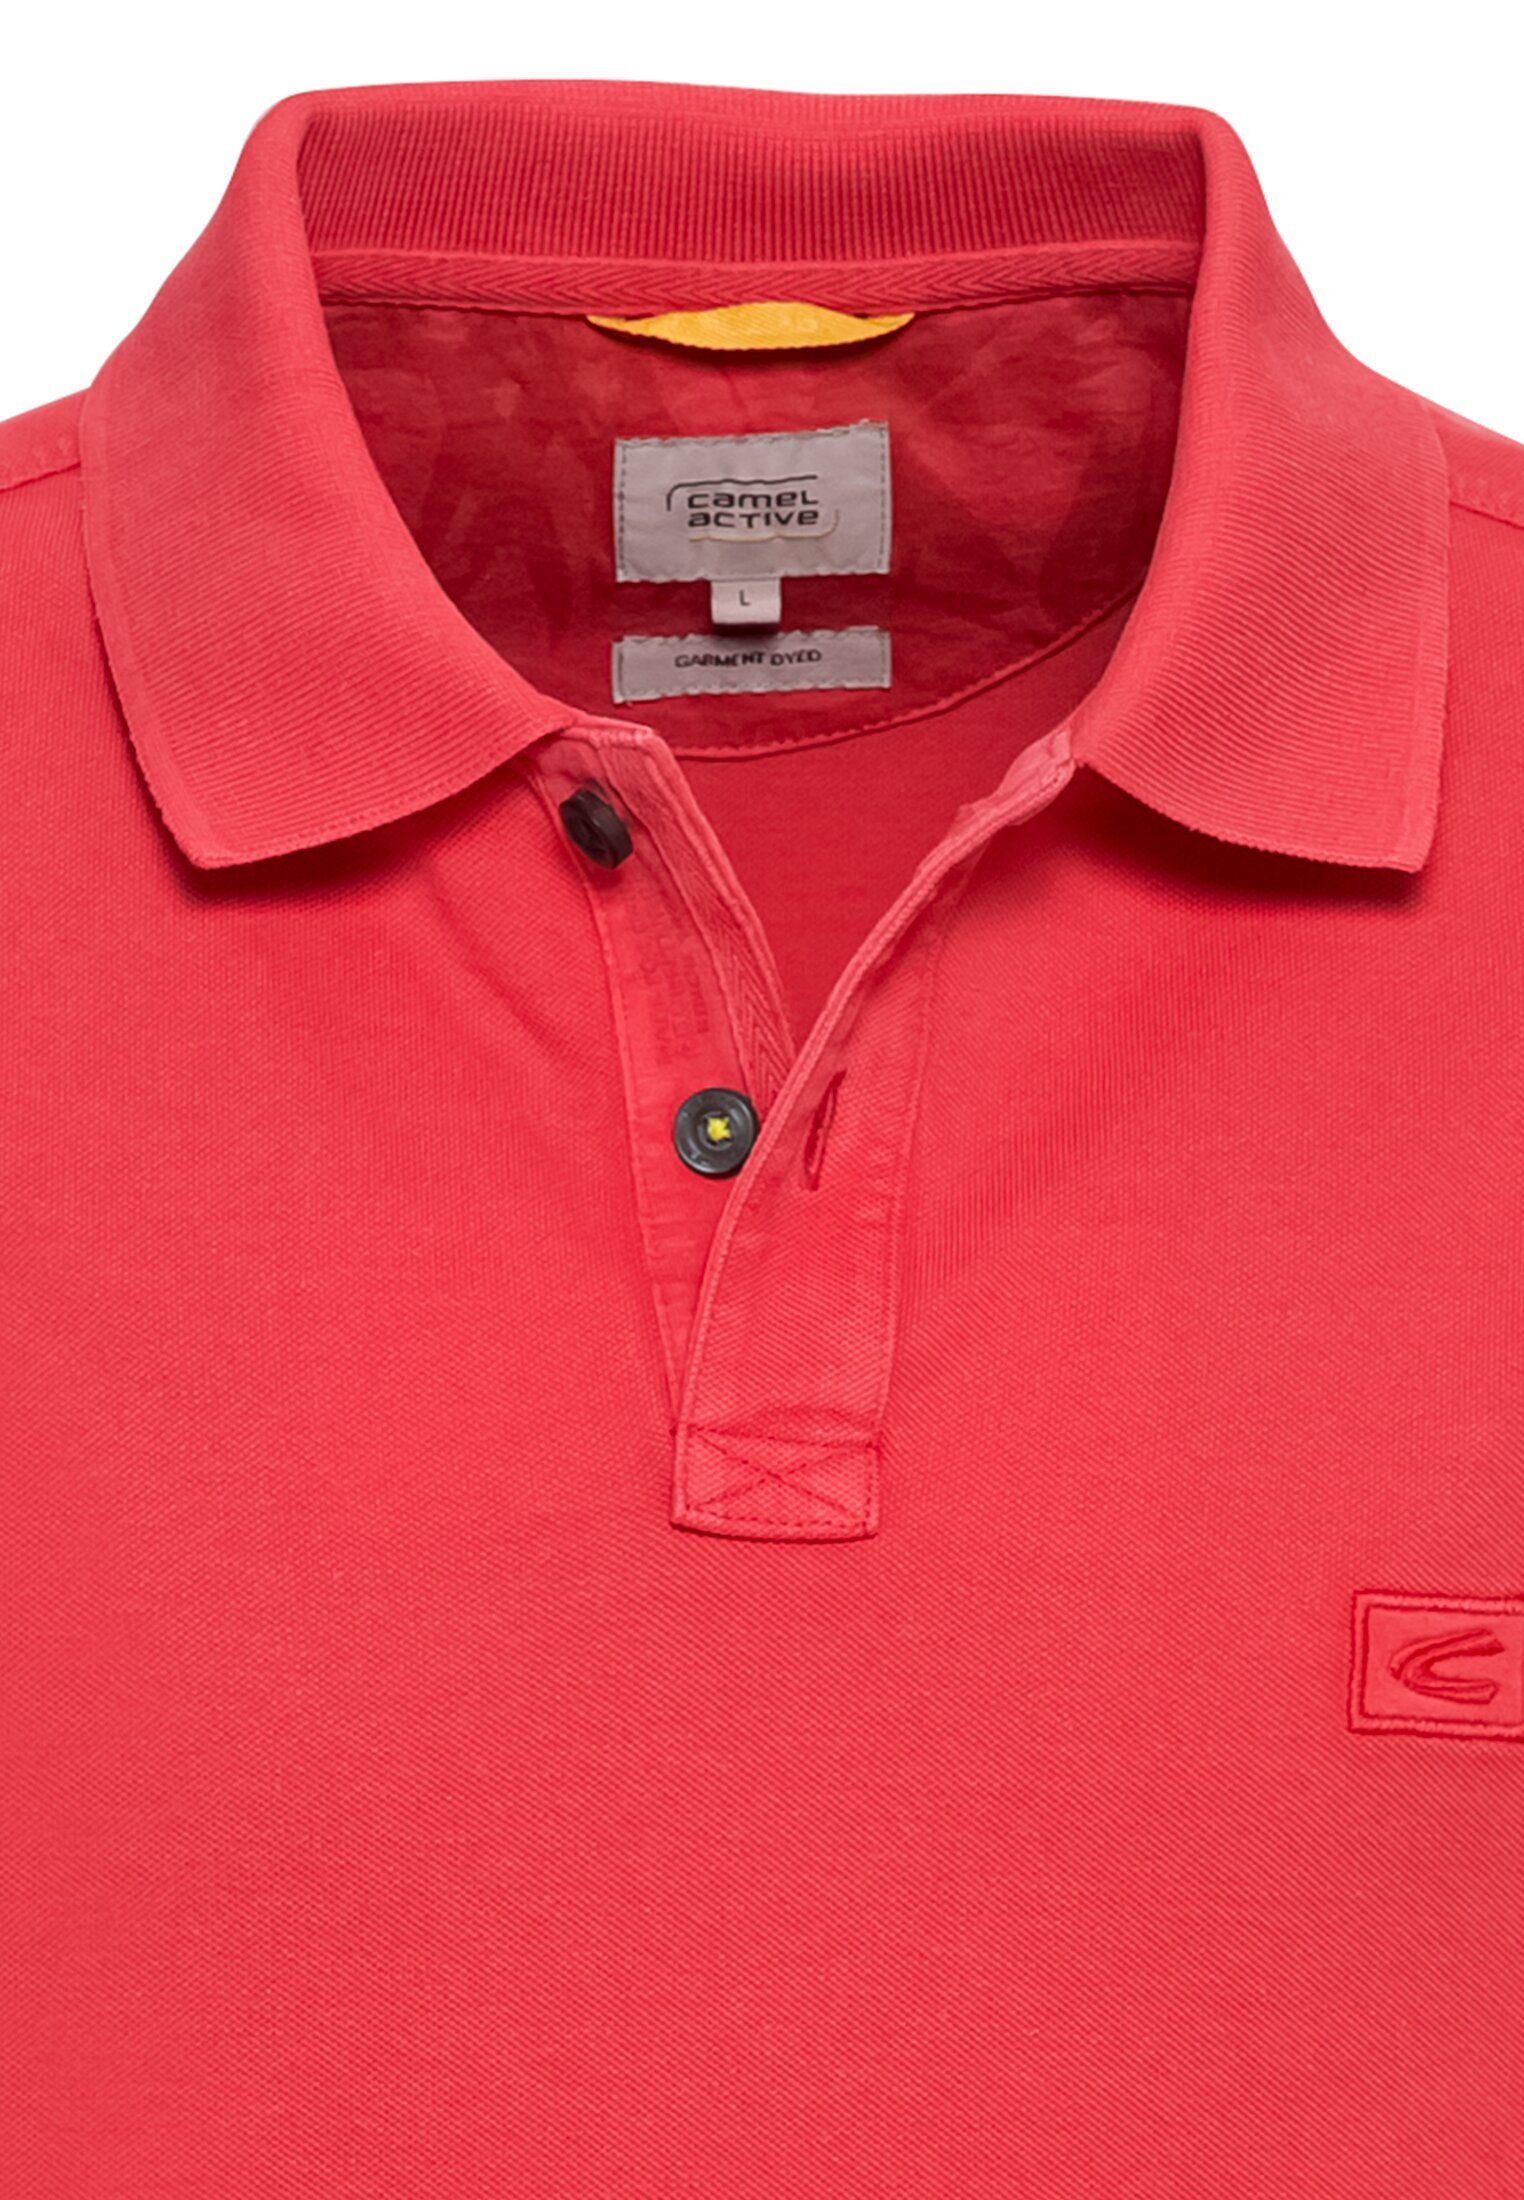 Poloshirt reiner active aus Rot camel Shirts_Poloshirt Baumwolle